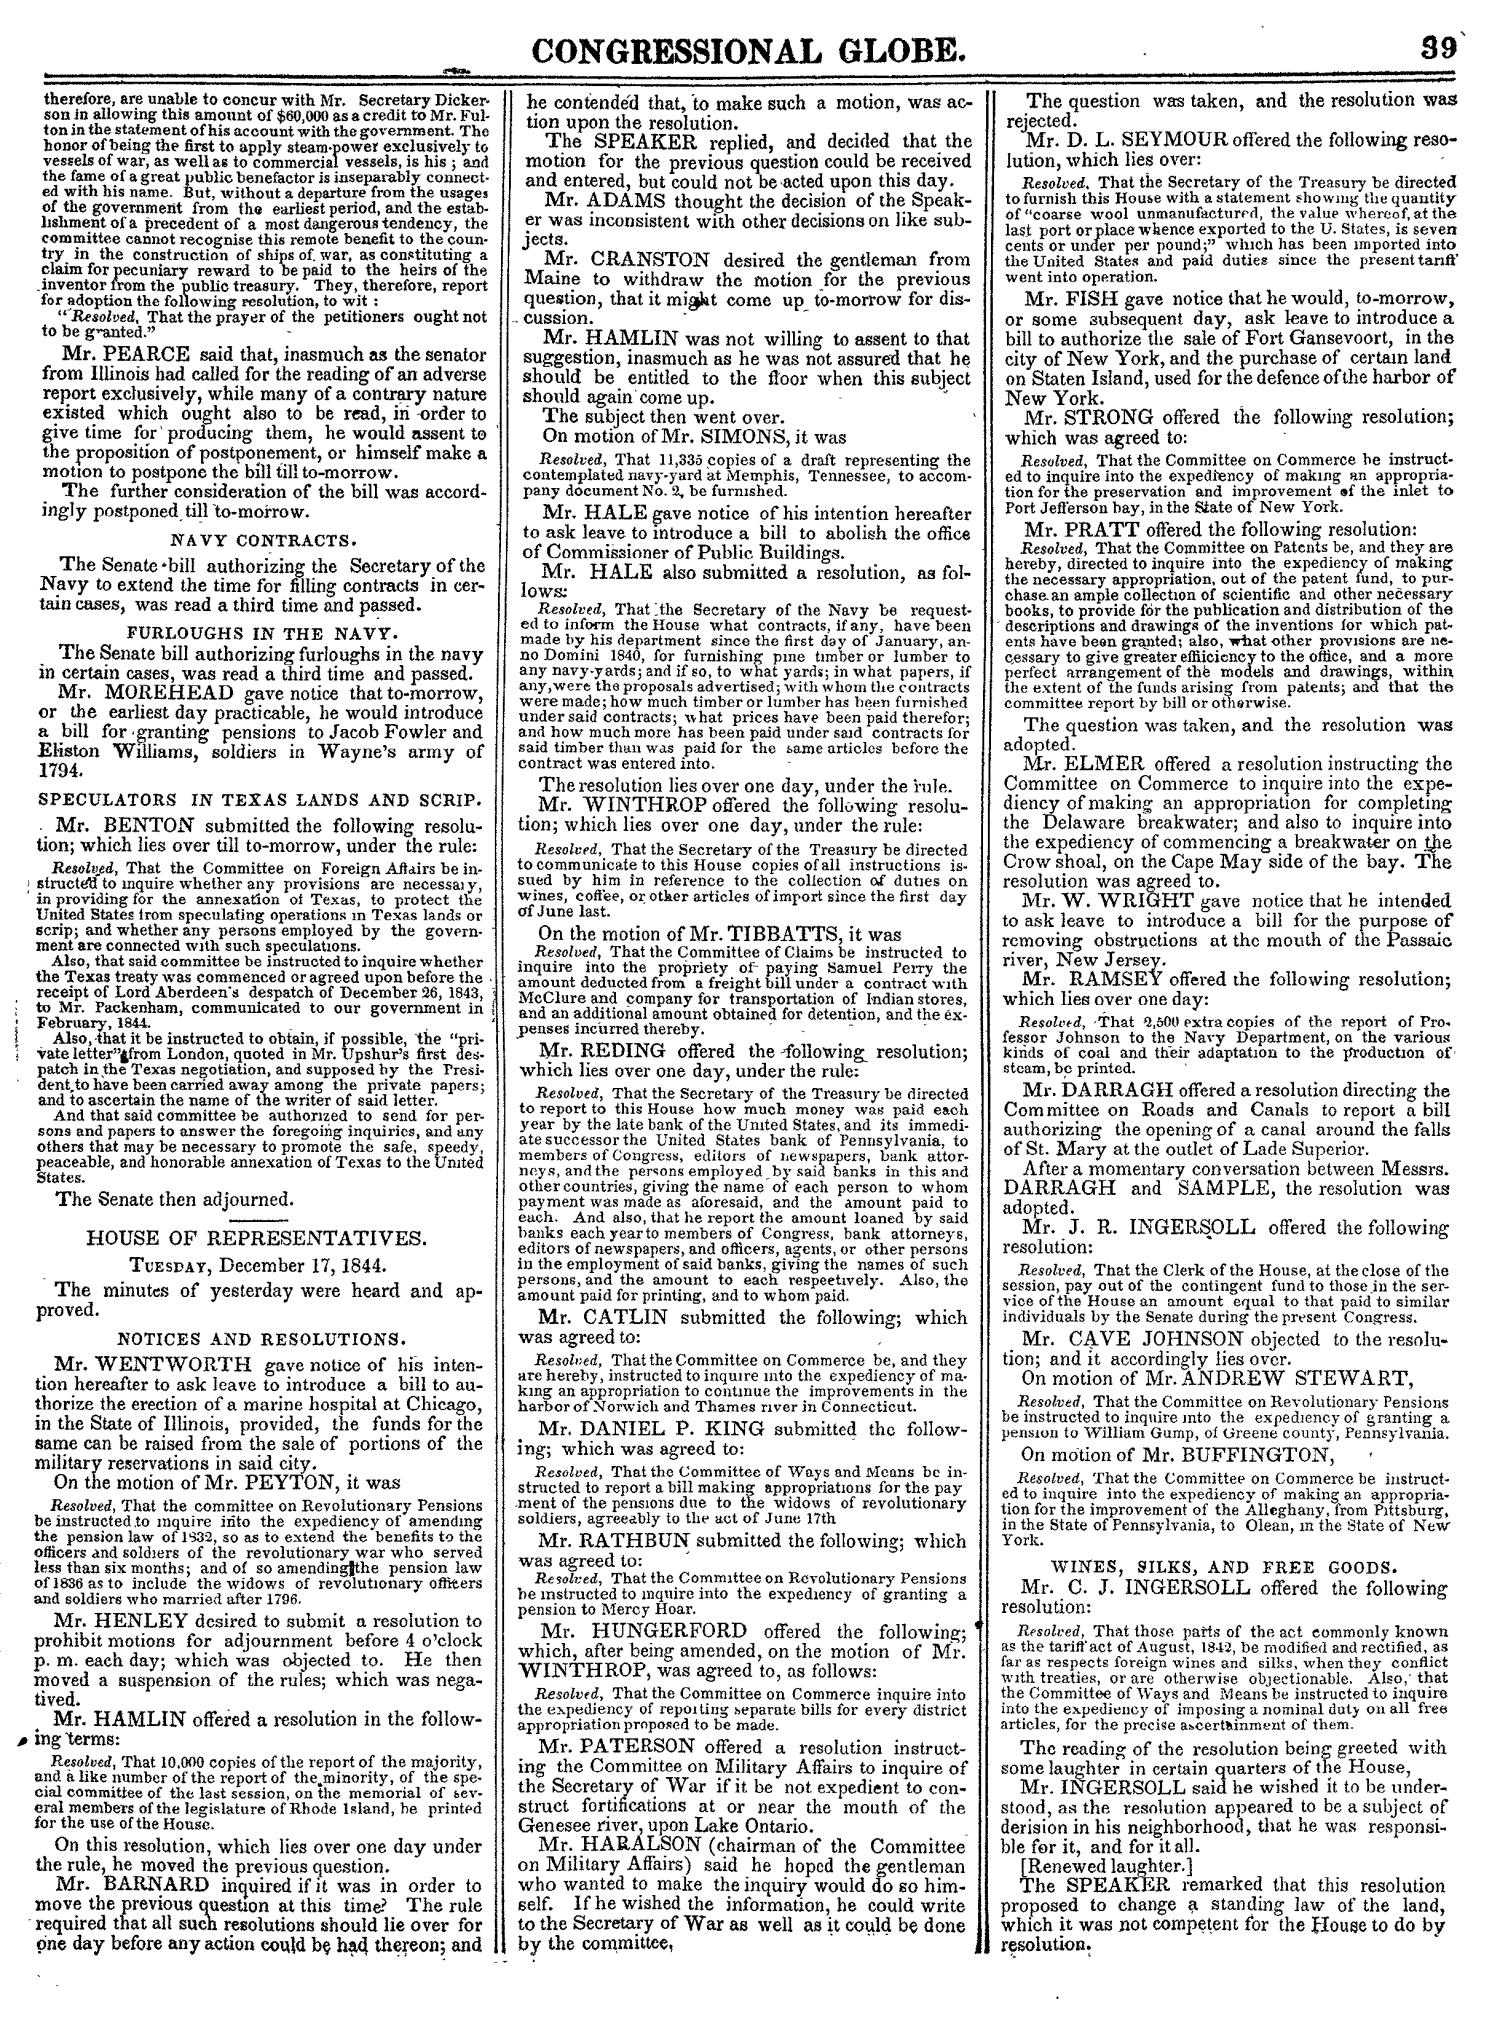 The Congressional Globe, Volume 14: Twenty-Eighth Congress, Second Session
                                                
                                                    39
                                                